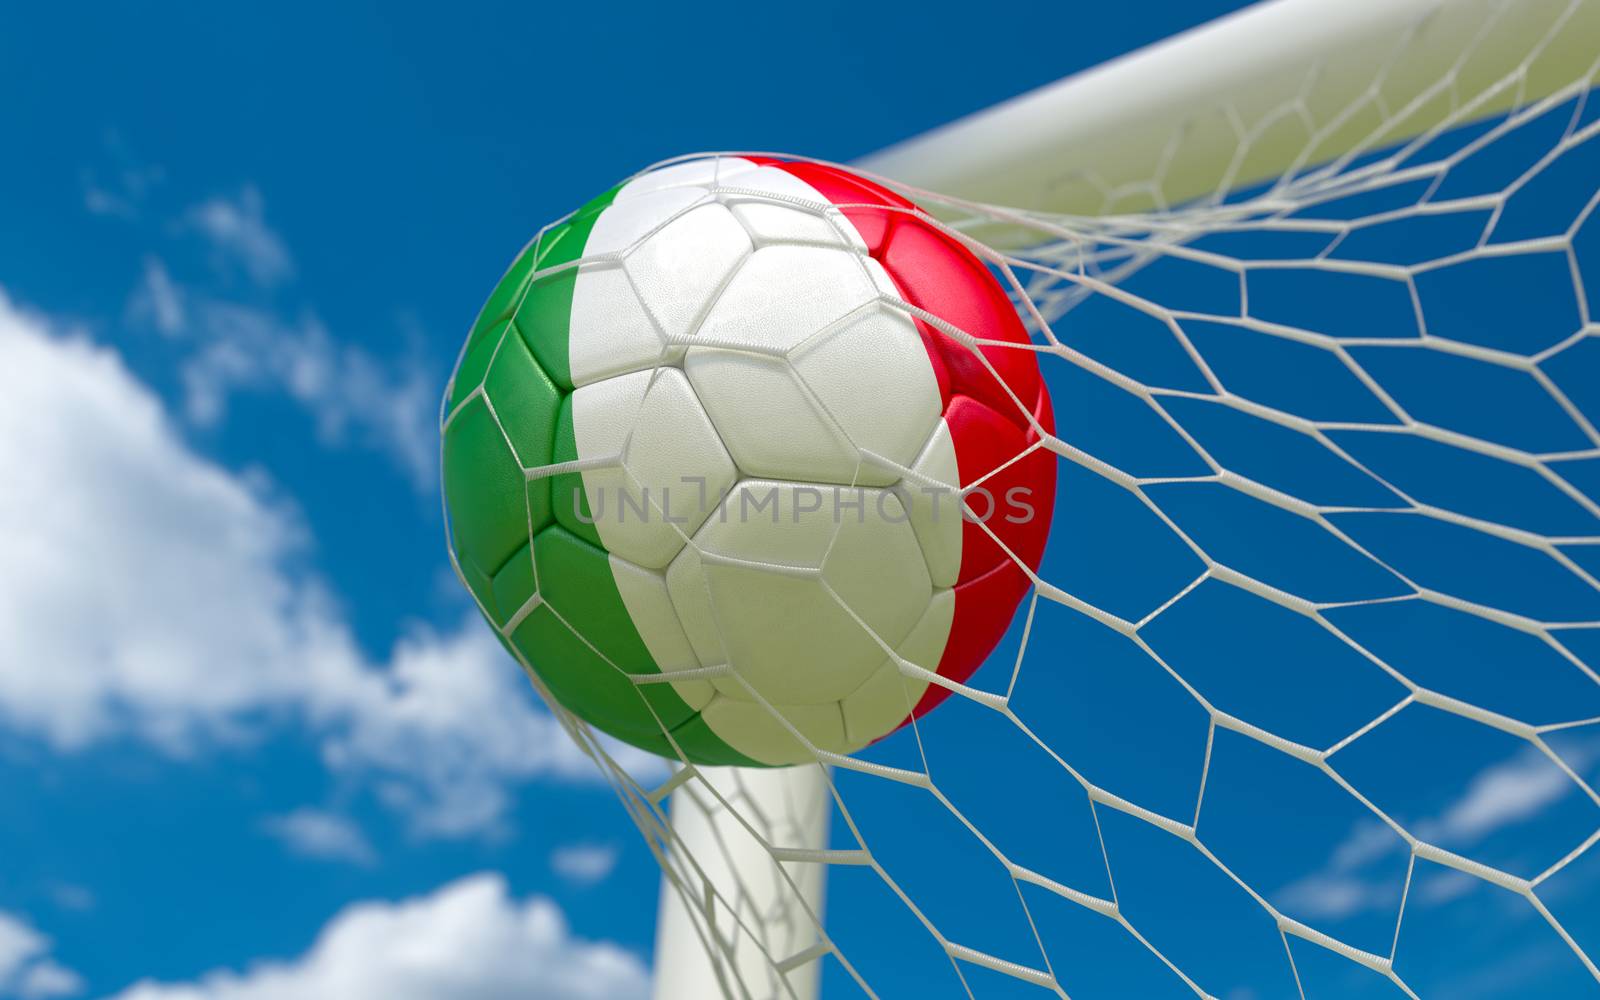 Italy flag and soccer ball in goal net by Barbraford